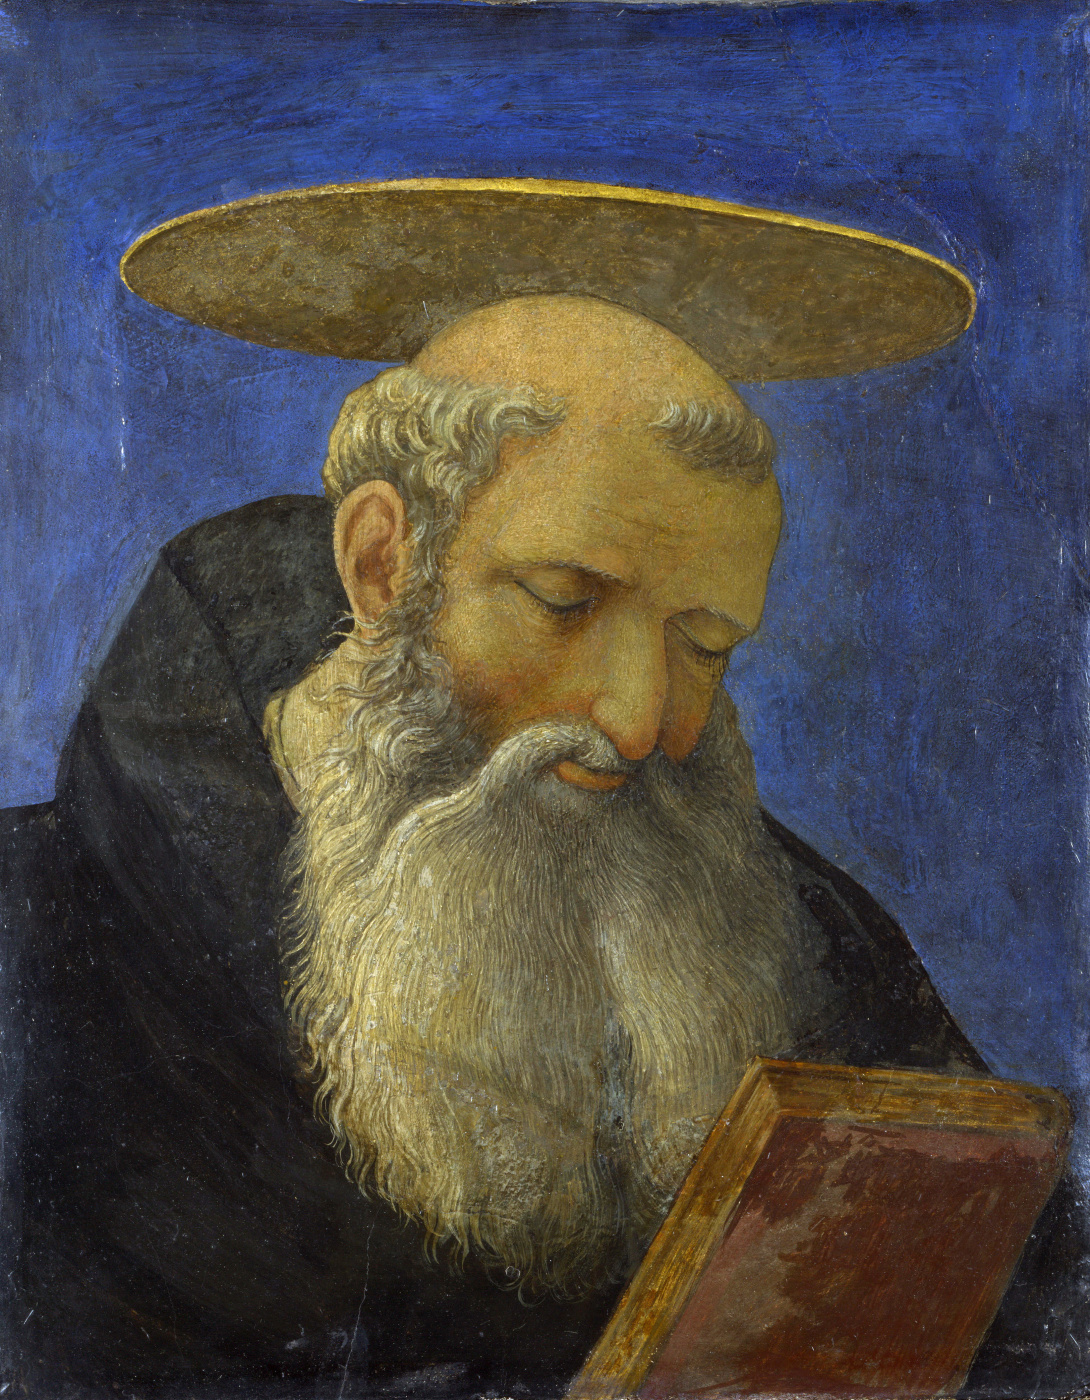 Domenico Veneziano. A portrait of the Saint (the Saint with a beard)